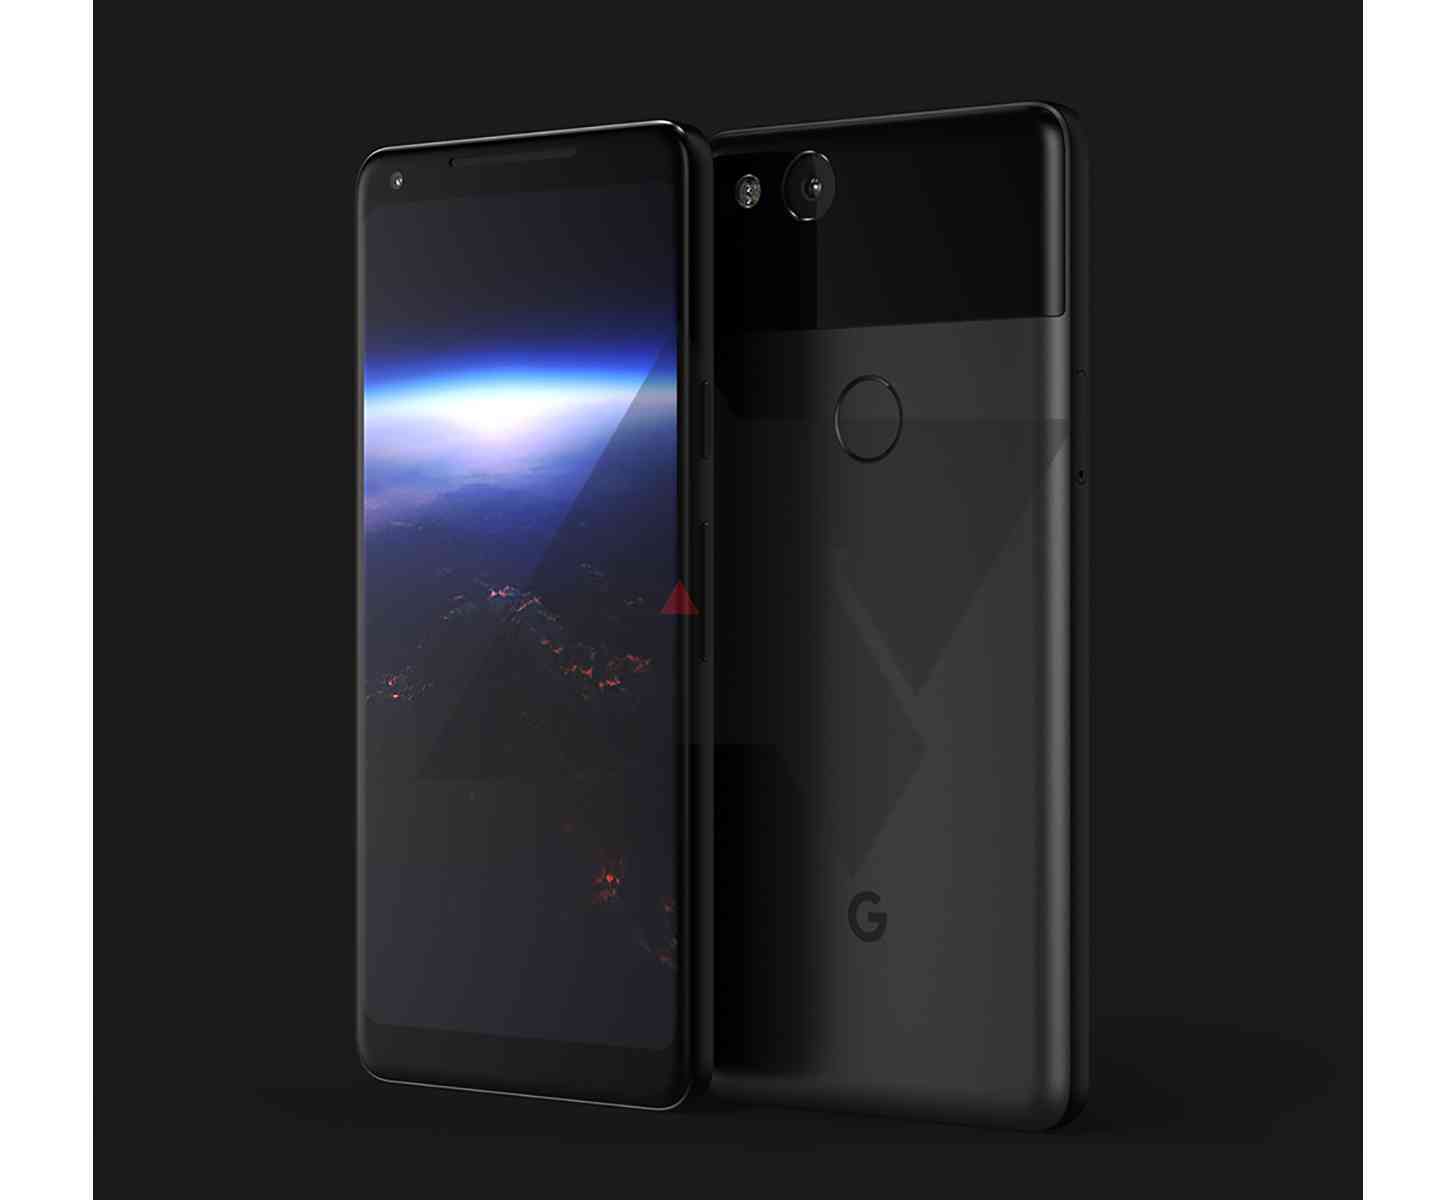 Google Pixel XL 2 leaked render